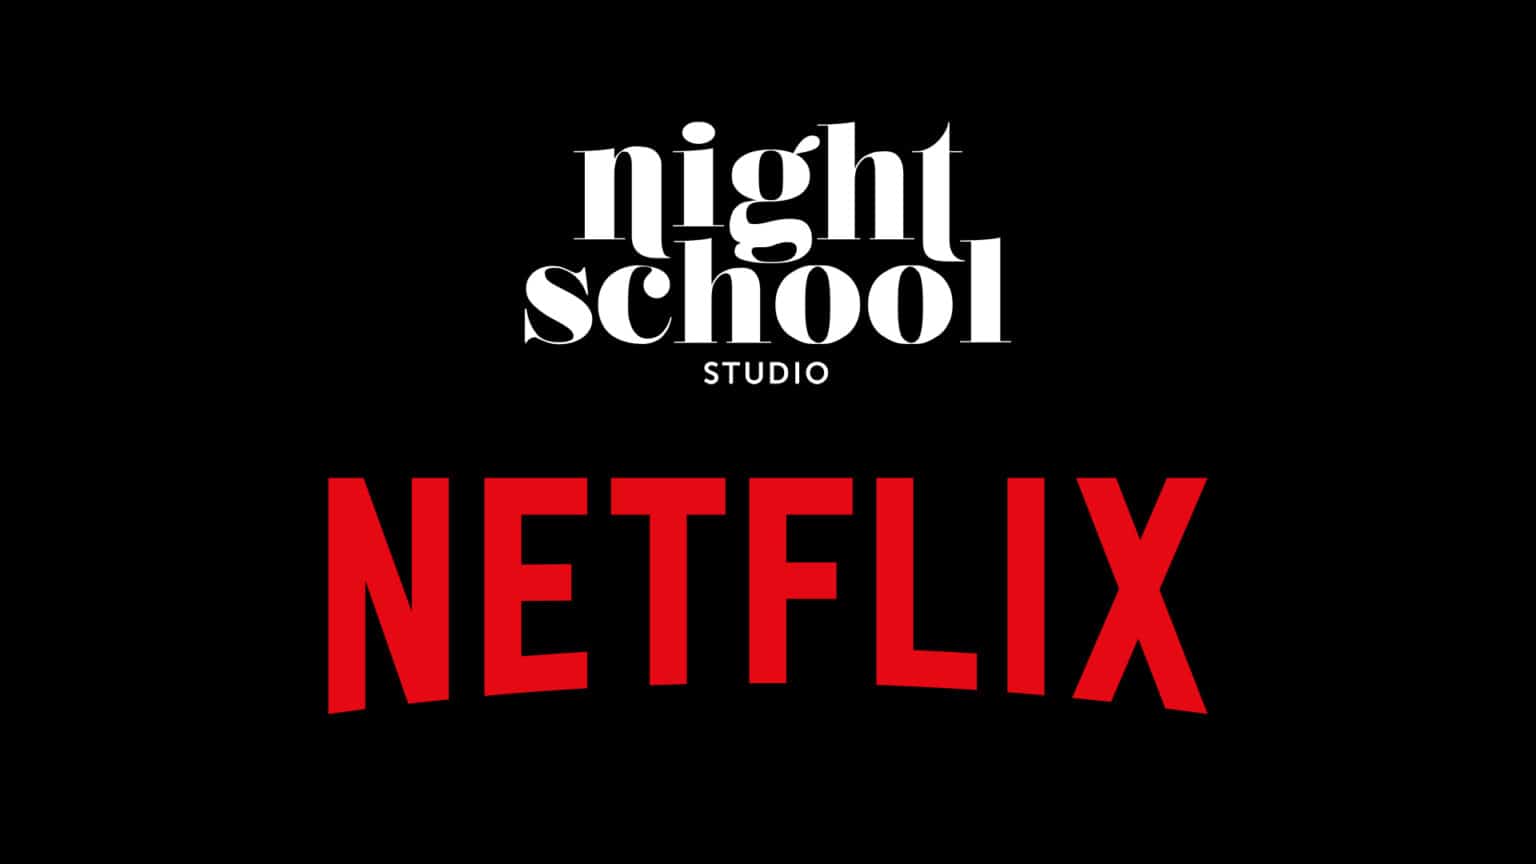 Netflix Acquires Oxenfree Developer Night School Studio